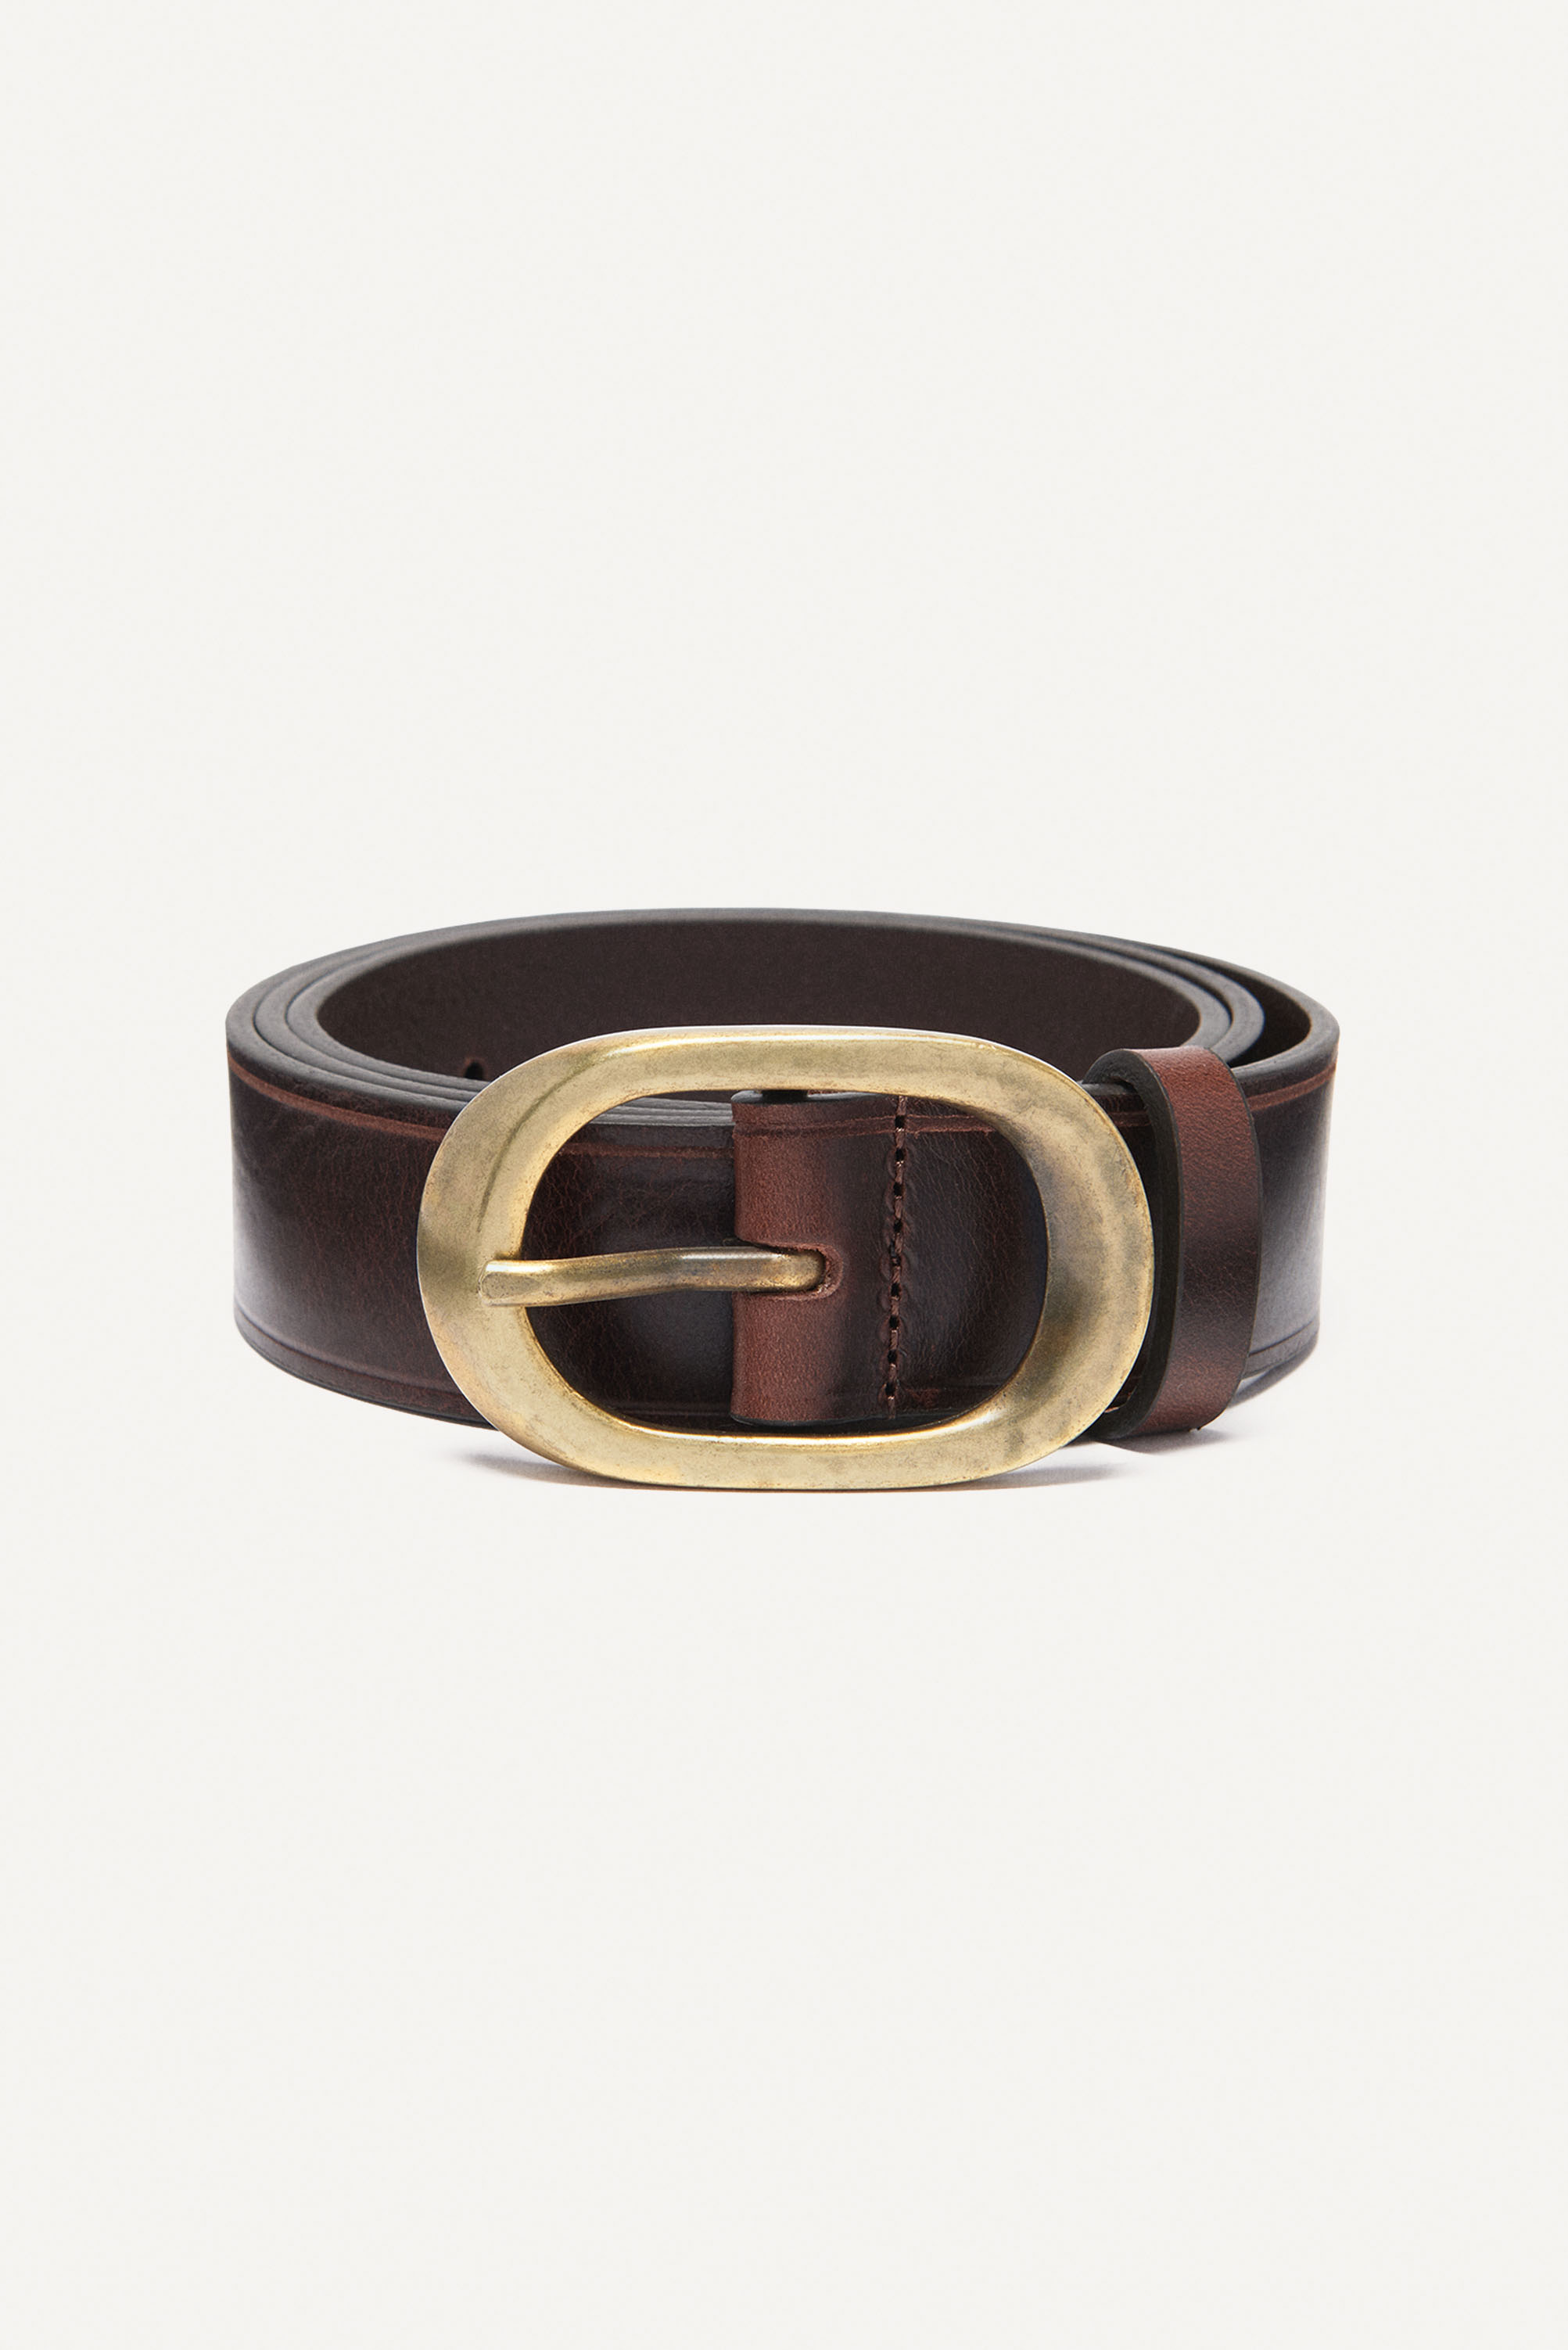 Presh Designer Fabric Oval Belt Buckle Dark Brown Leather Belt 35 M/L  Ladies